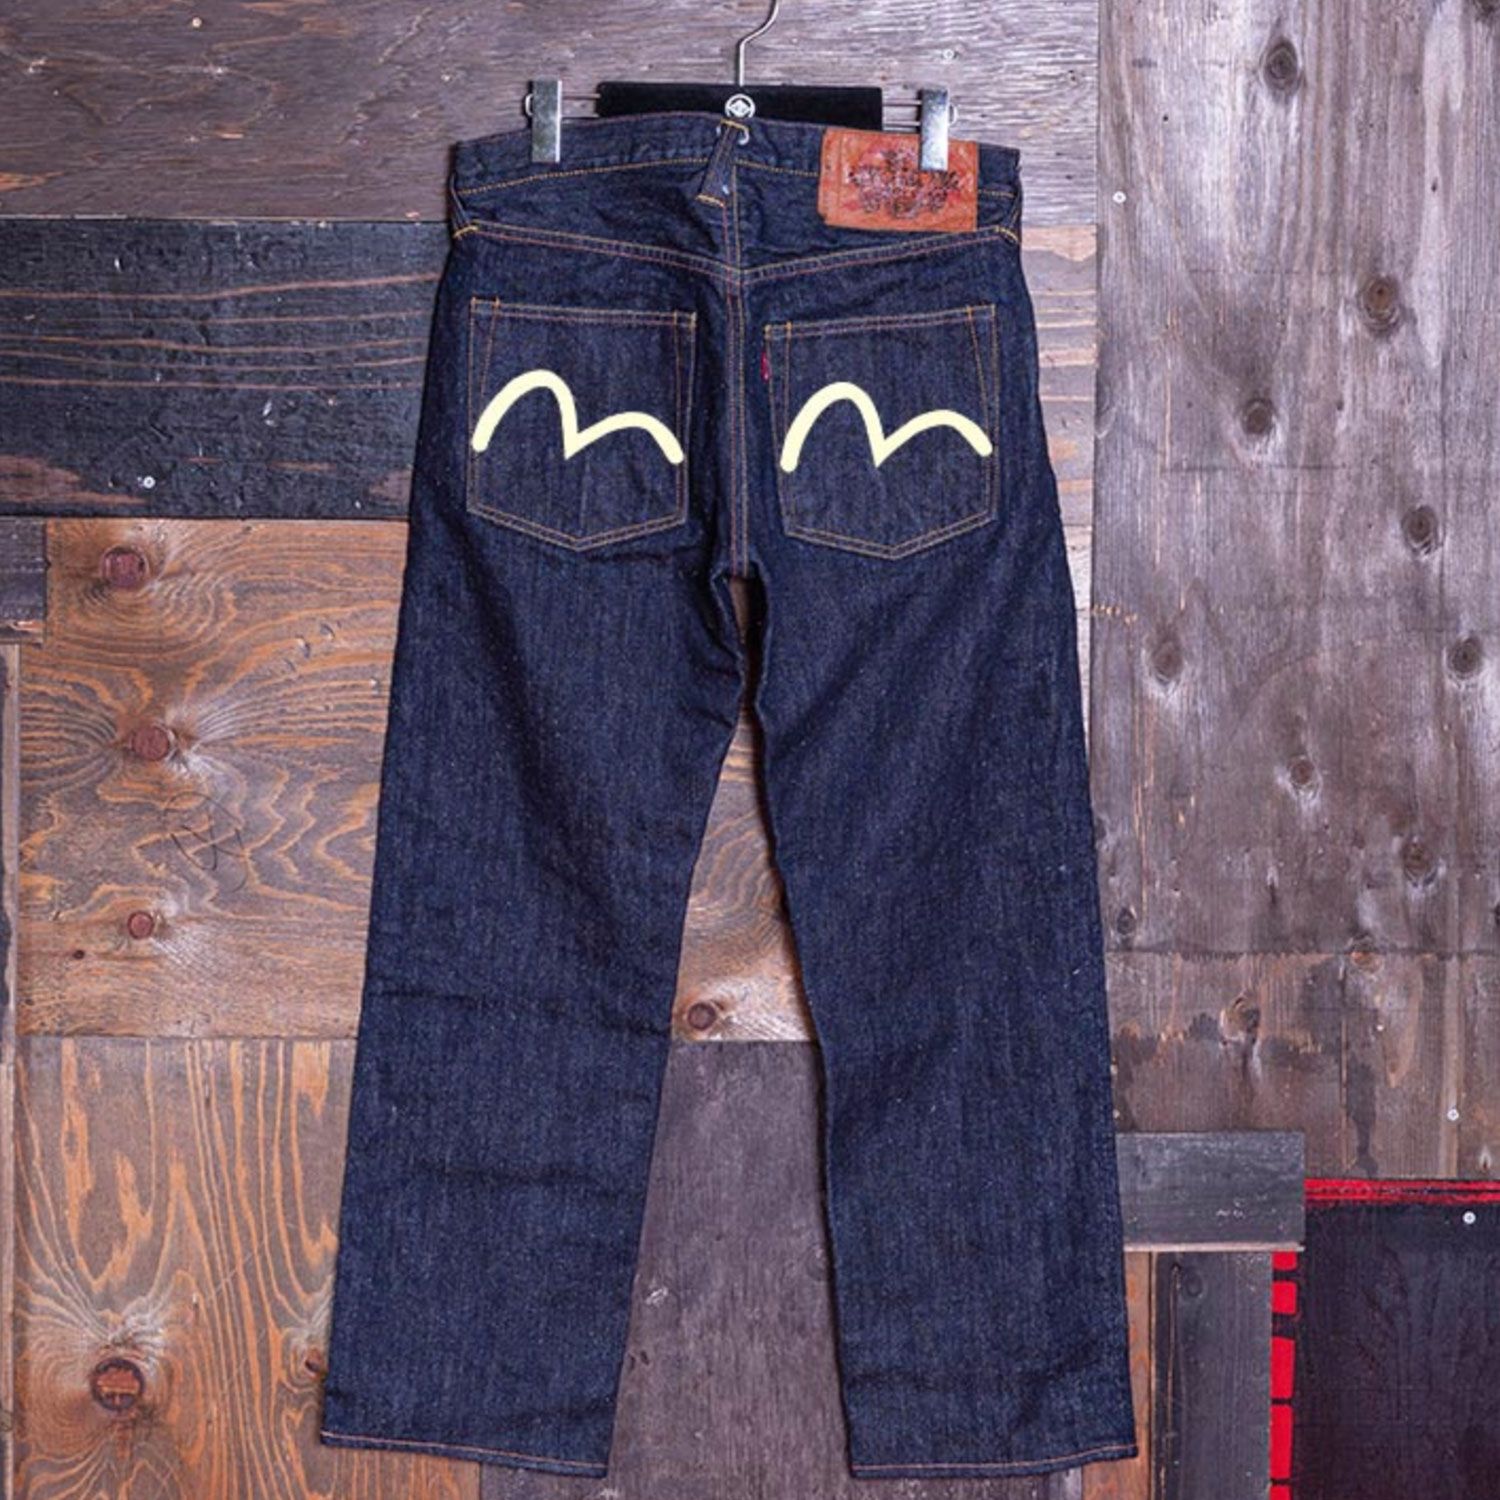 NHKのおはよう日本にて持続可能なジーンズとしてエビスジーンズが紹介